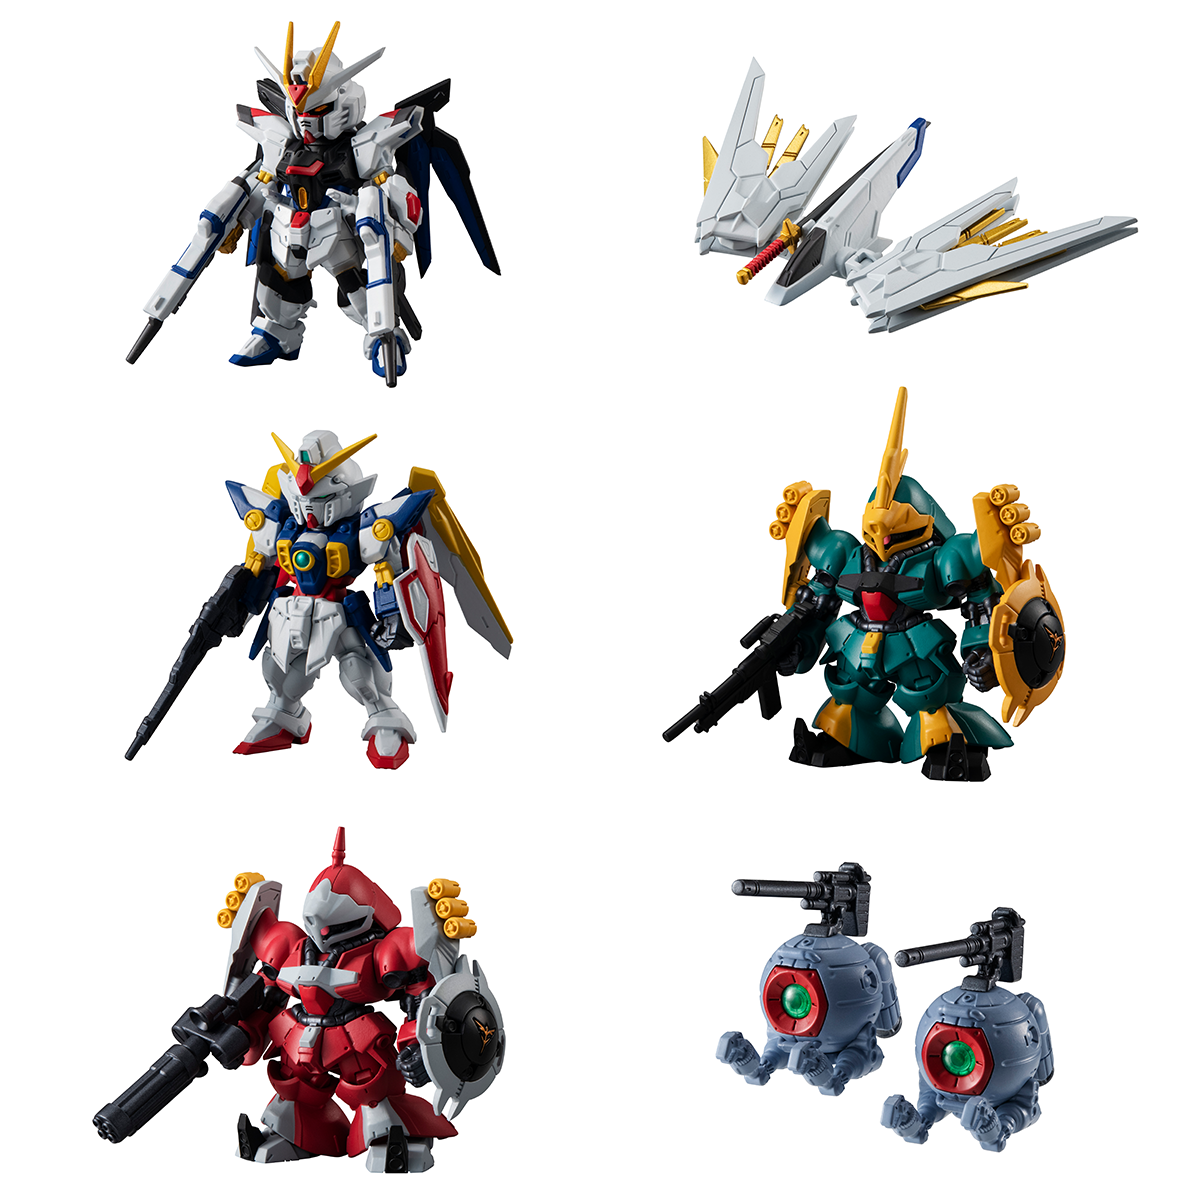 SheetNo:42996&42997 <OrderPrice$285&$337> #高達Converge #25=FW Gundam Converge盒玩